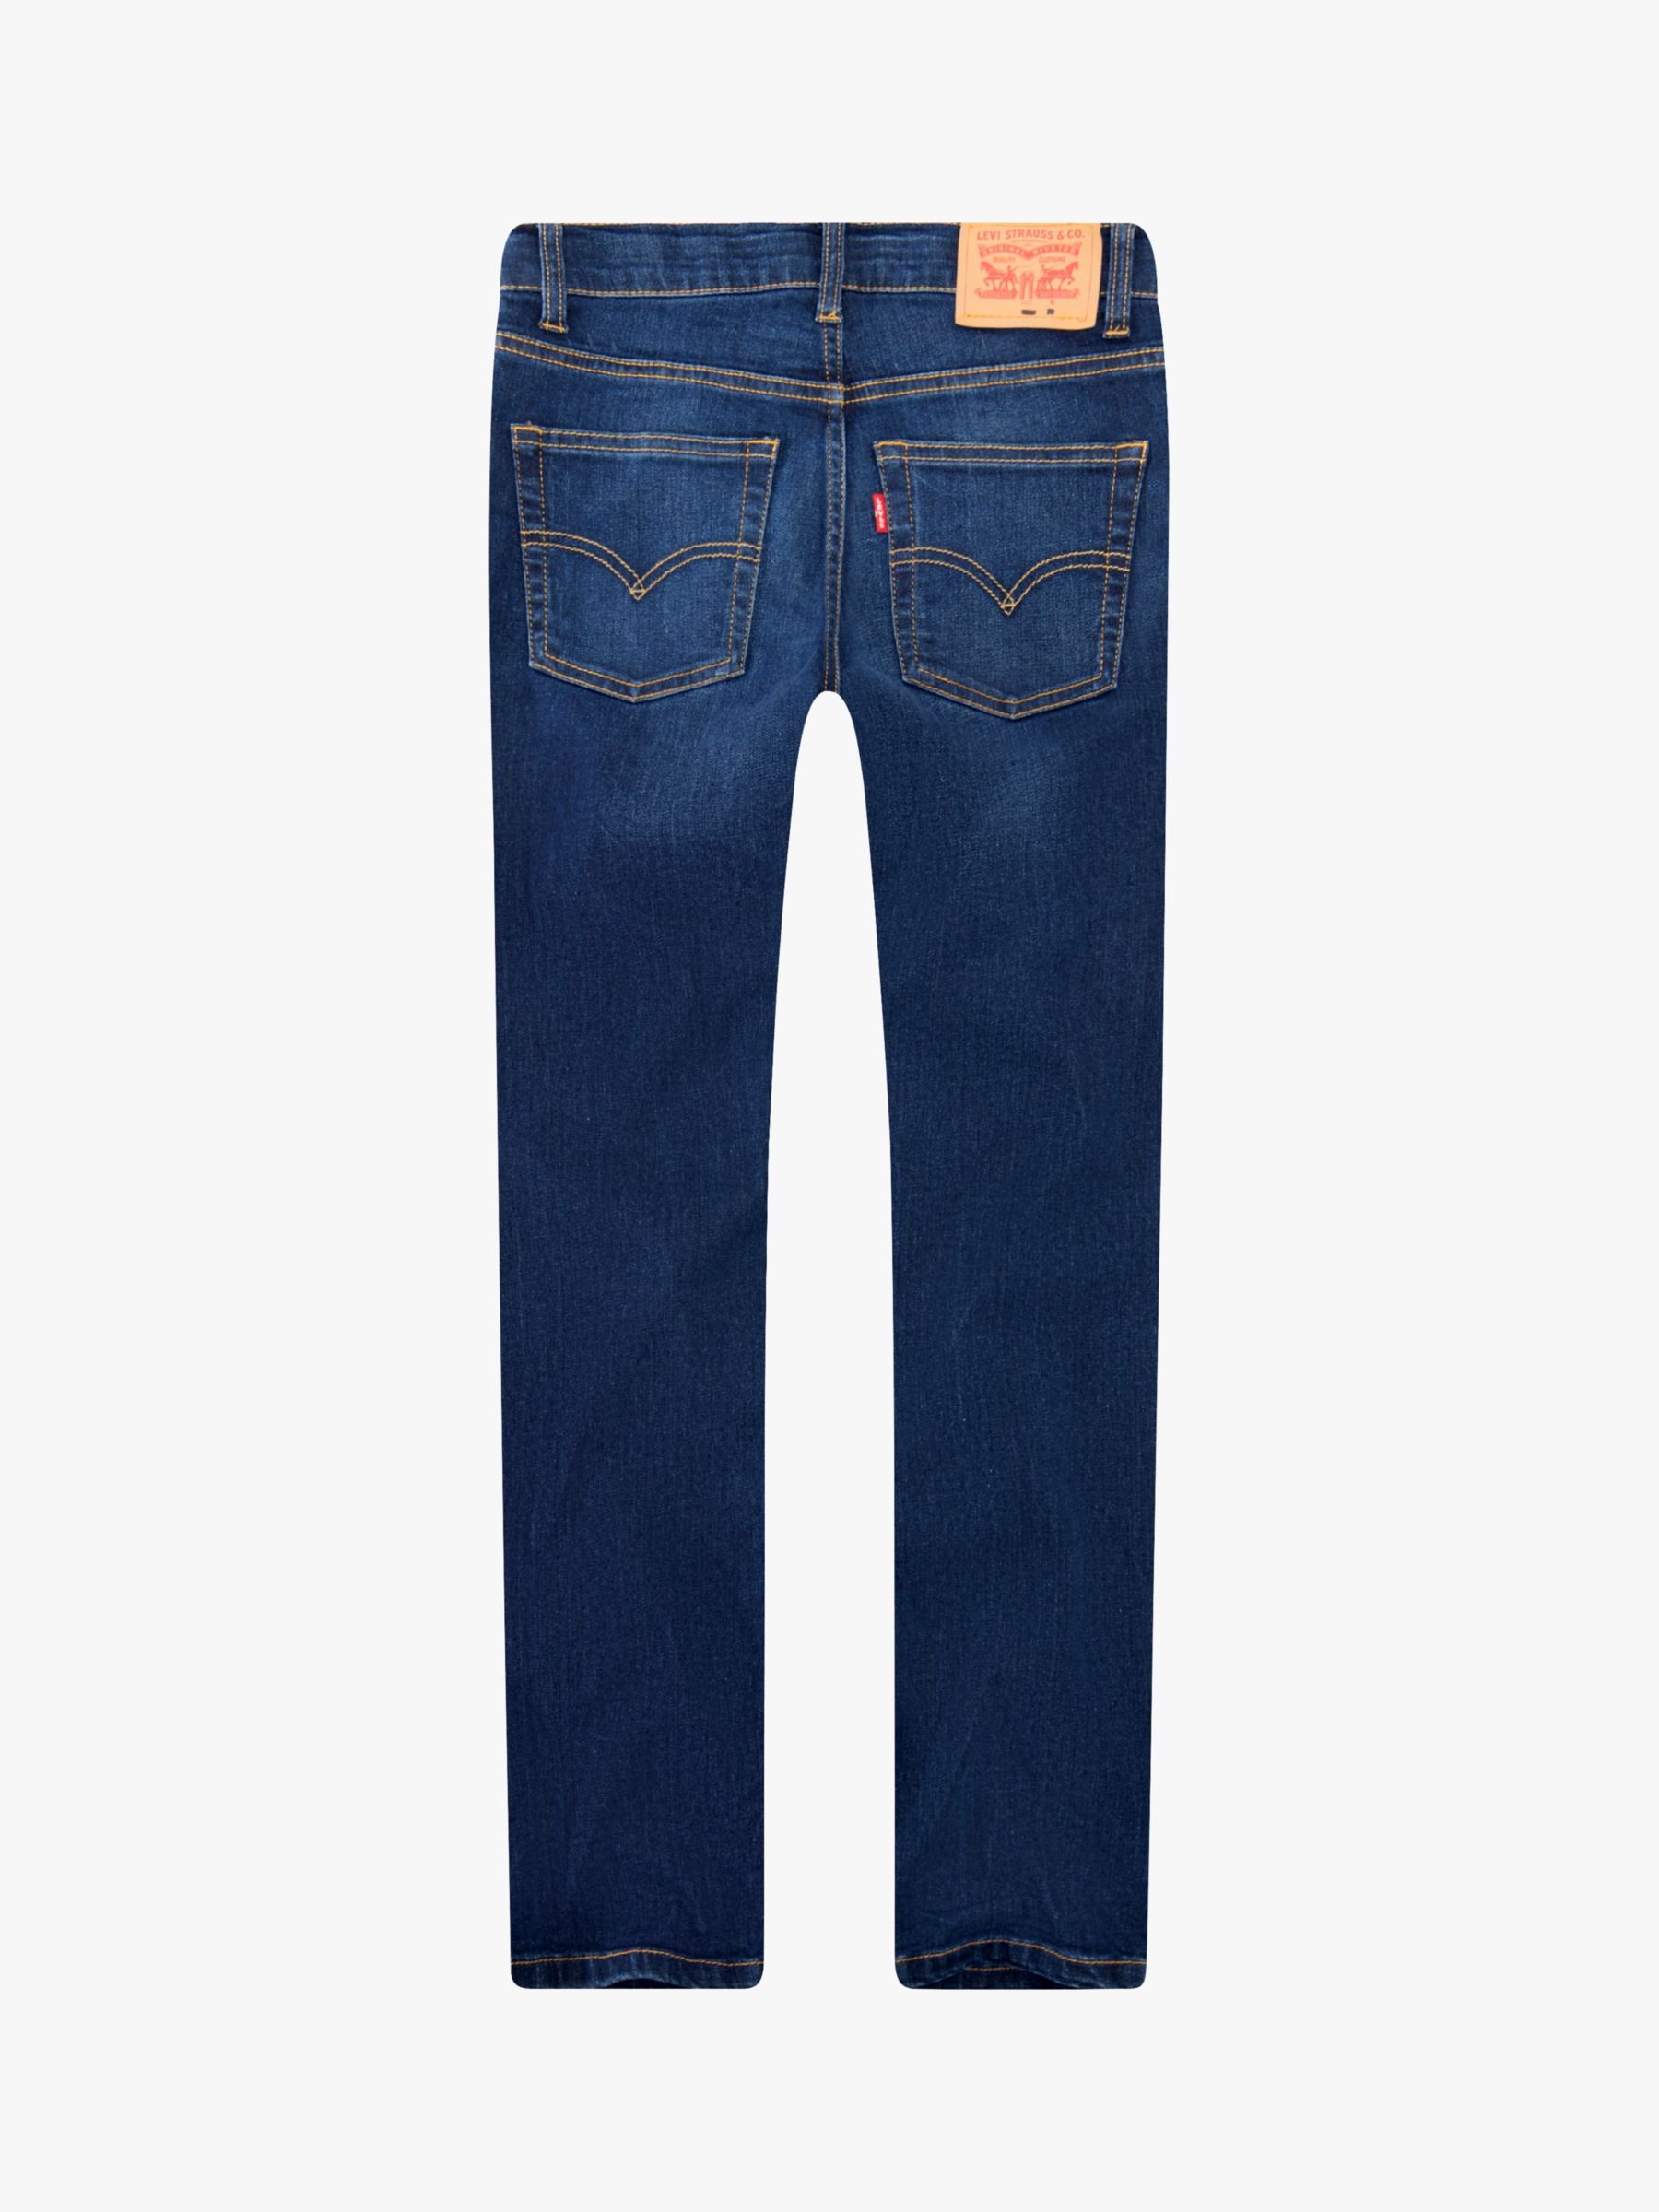 Levi's Boys' 510 Skinny Fit Jeans, Dark Blue at John Lewis & Partners